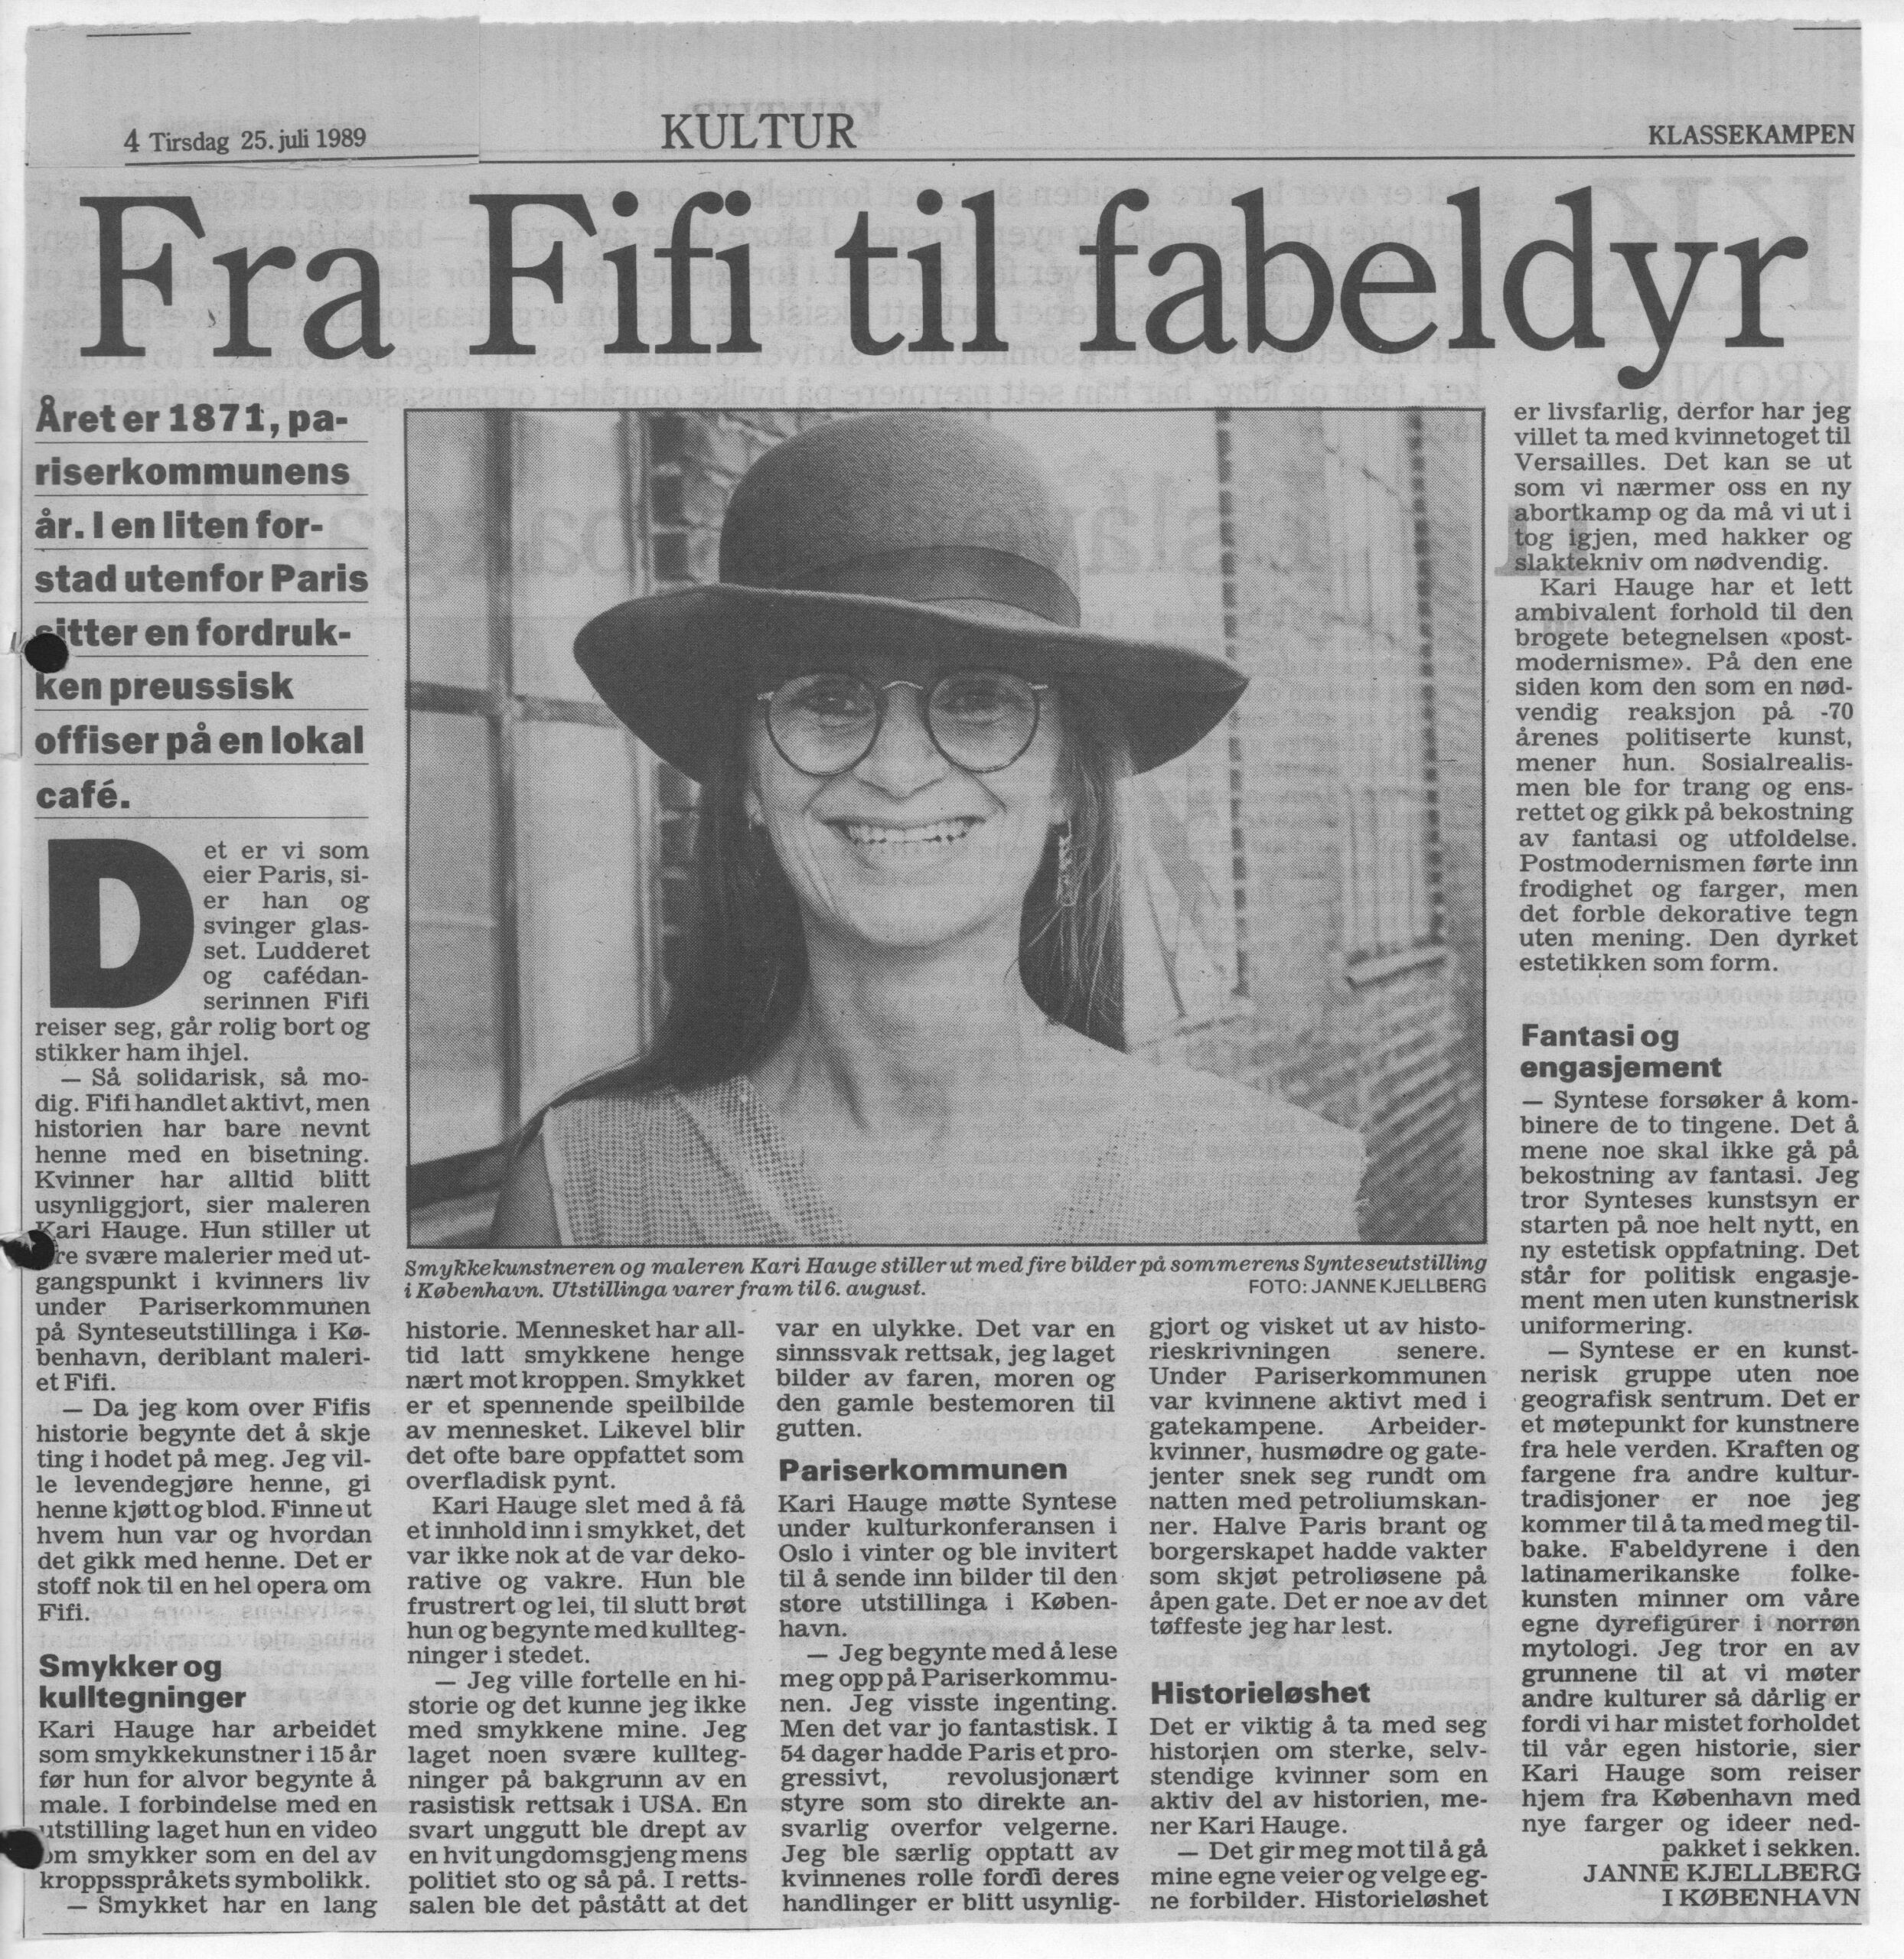 Fra Fifi til fabeldyr. Interview (Den lange rejse. Charlottenborg 1989, København). Janne Kjellberg. Klassekampen.